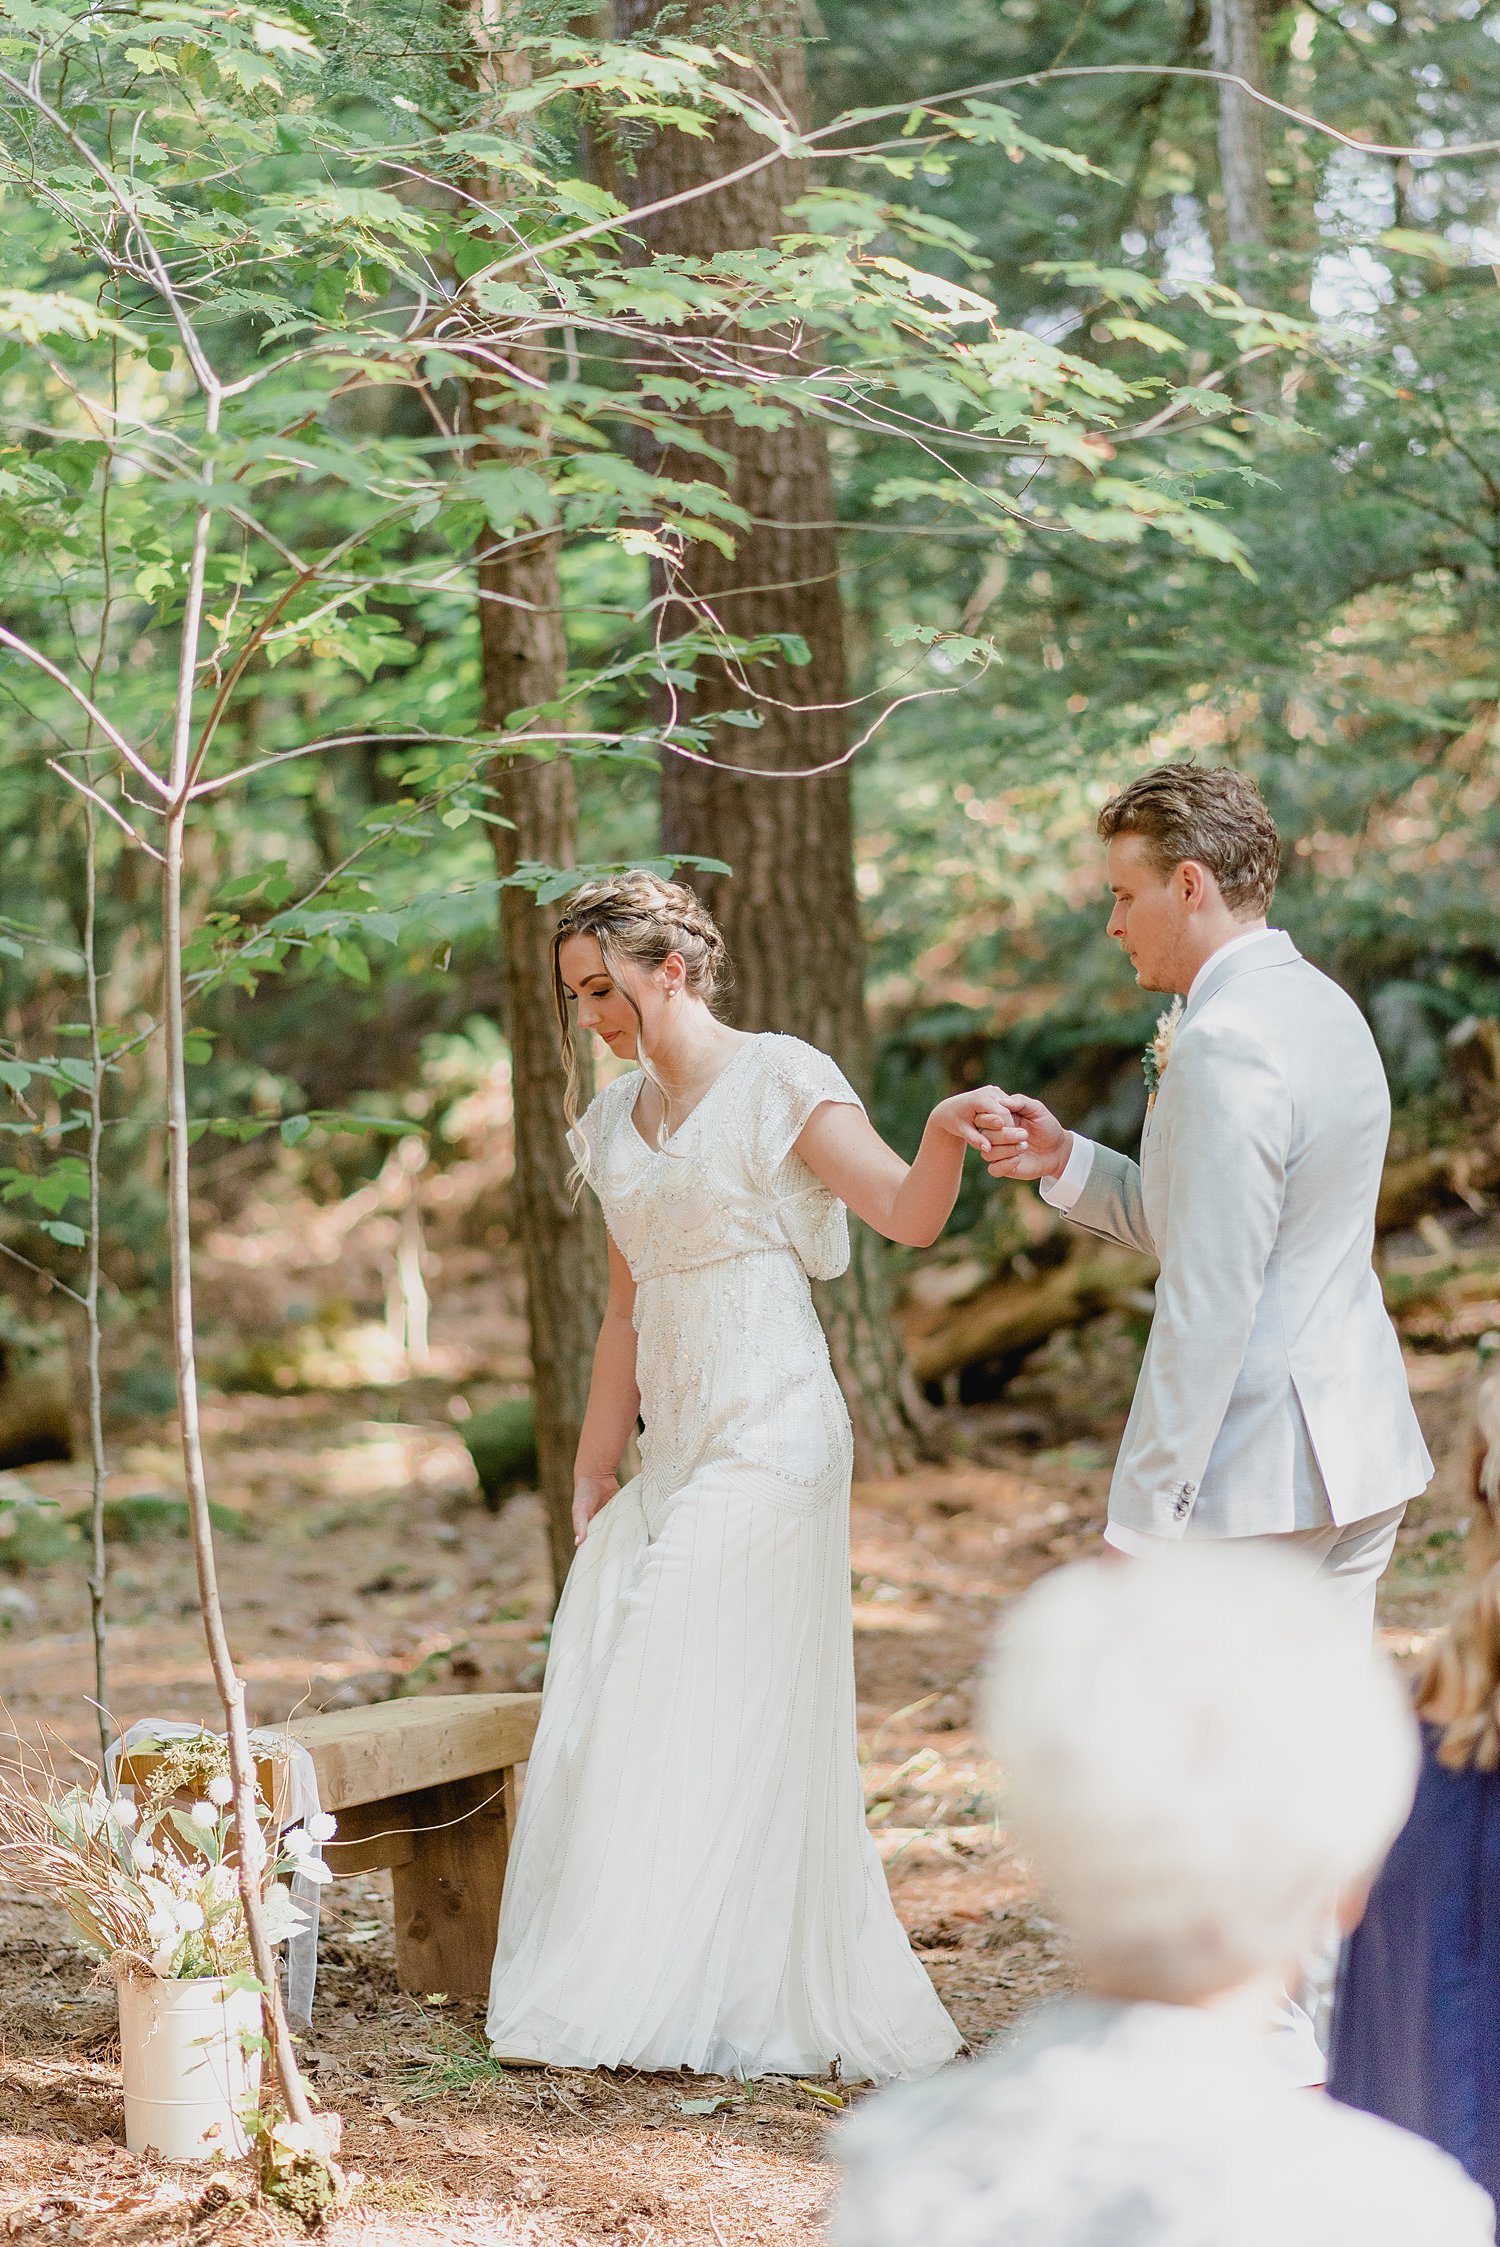 A Boho Fall Wedding at a Family Built Cabin in Lyndhurst, Ontario | Prince Edward County Wedding Photographer | Holly McMurter Photographs_0053.jpg